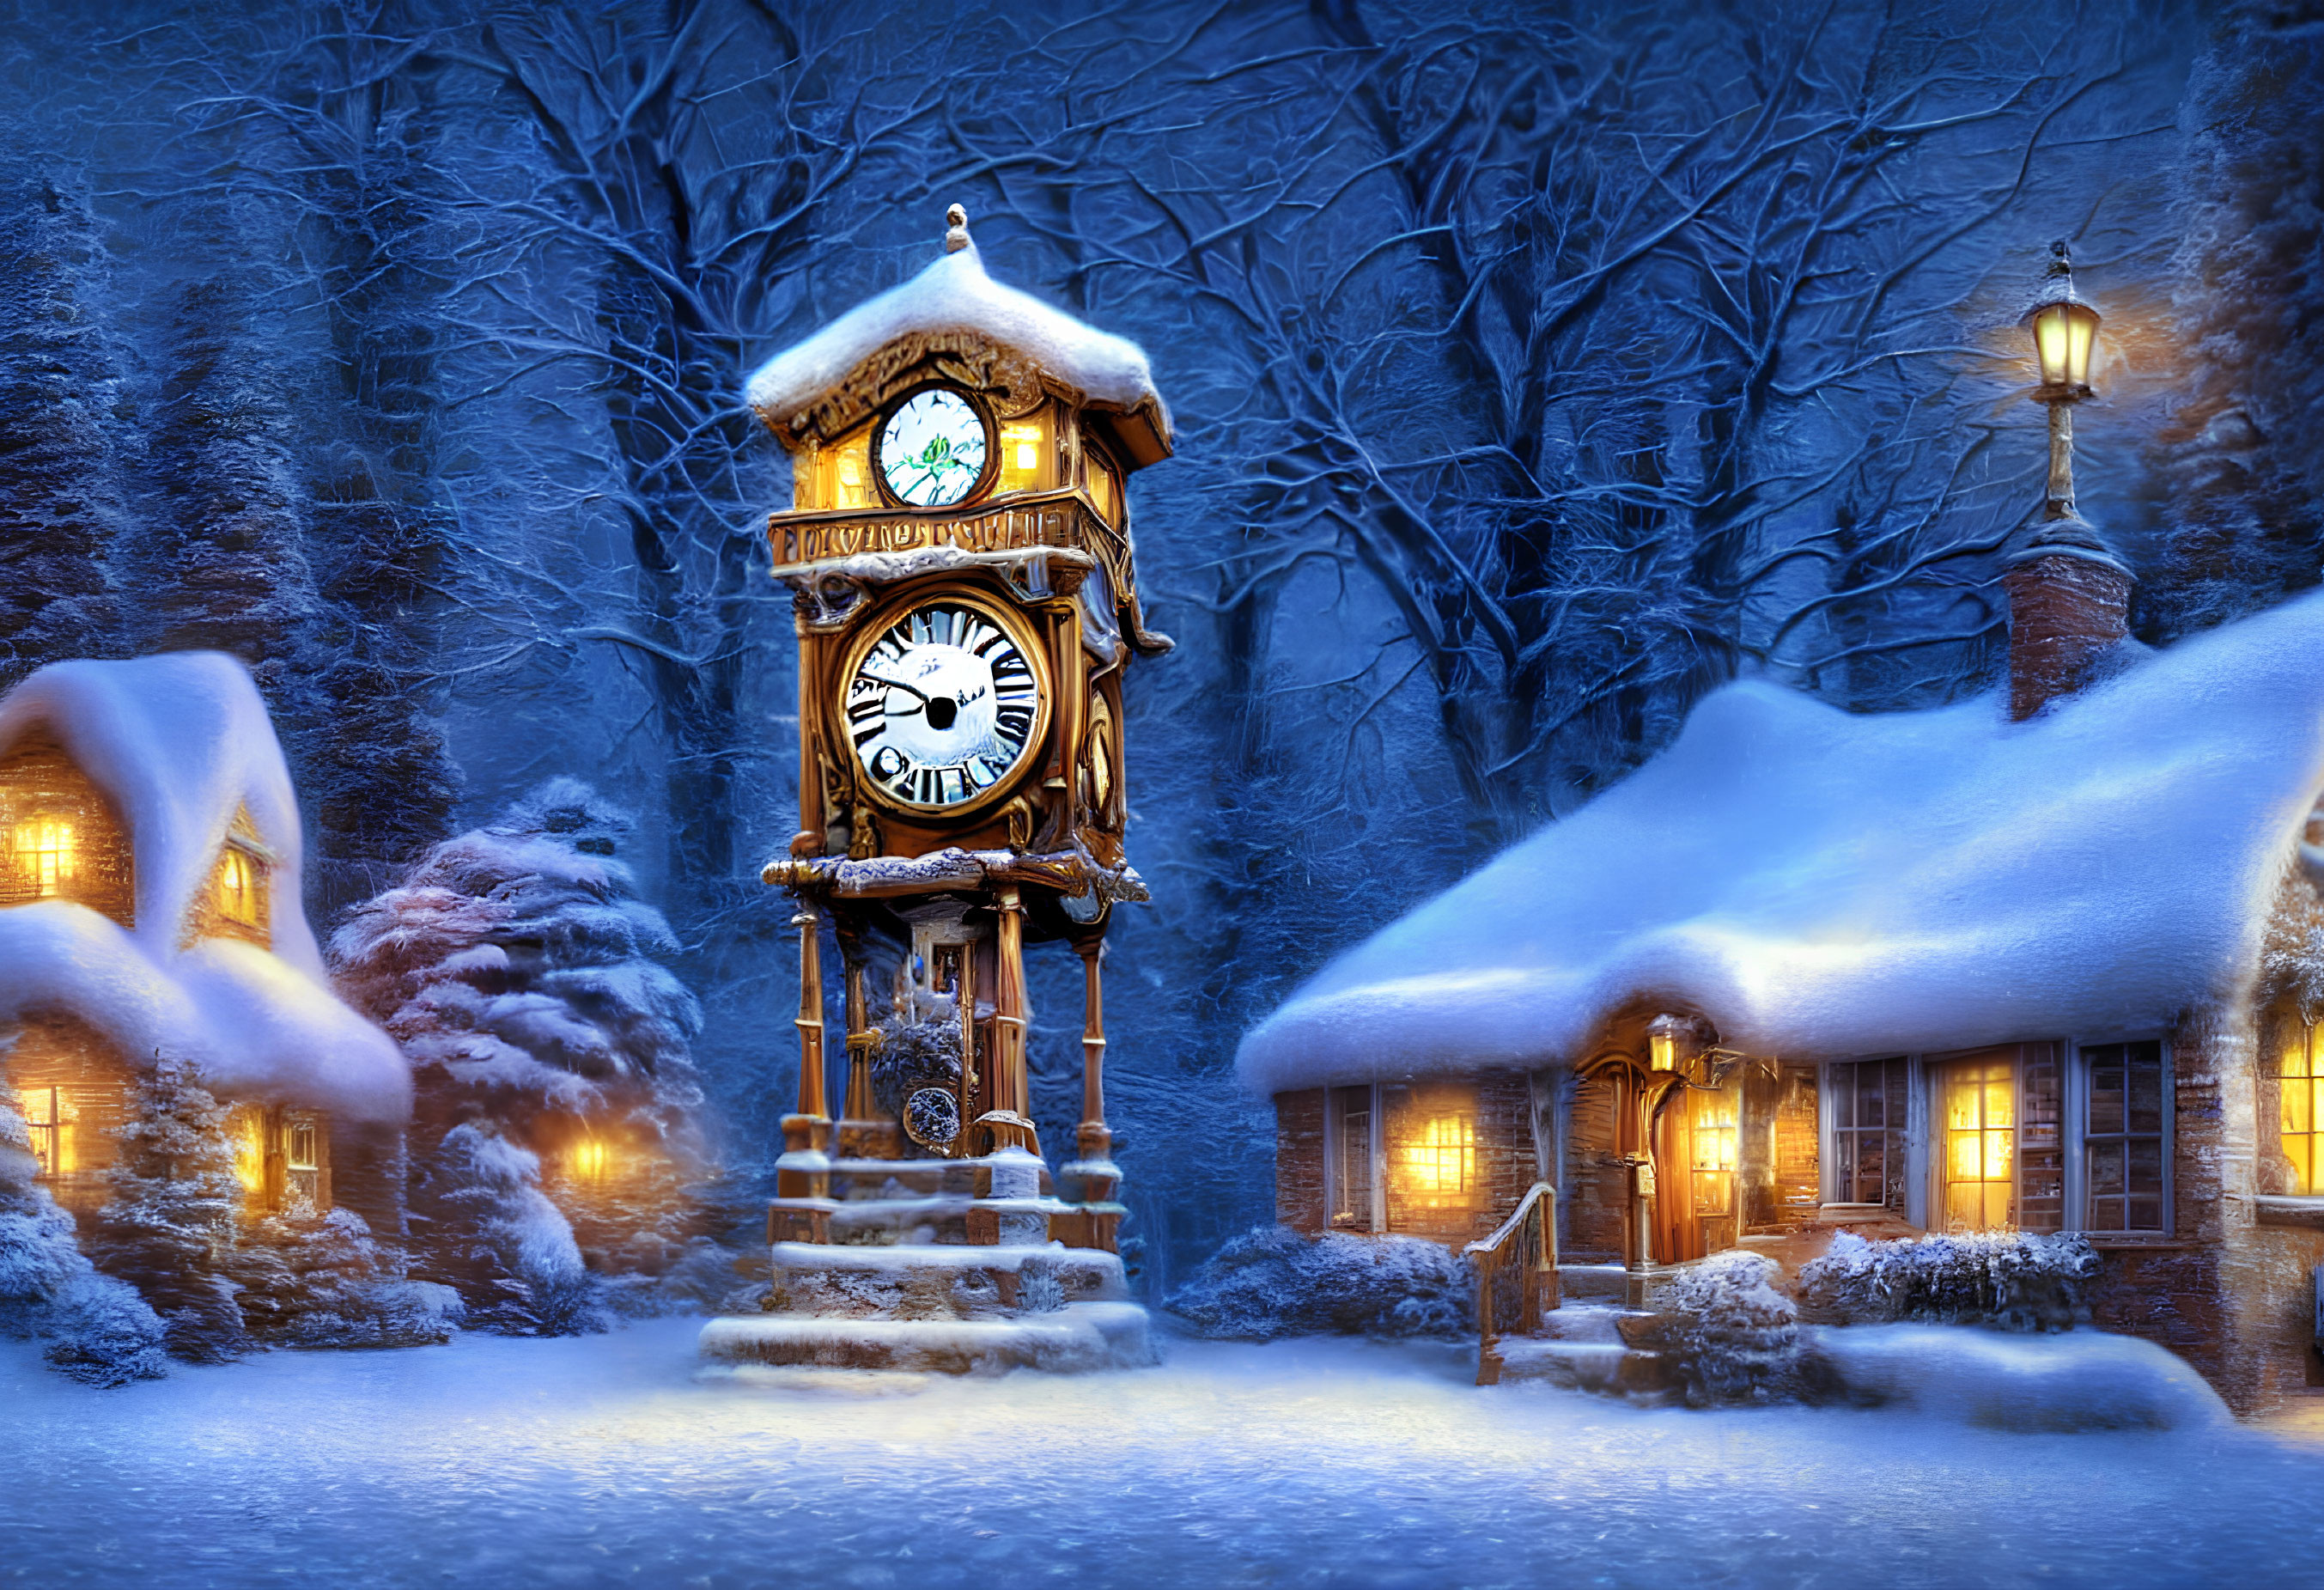 Ornate clock tower in snowy night landscape